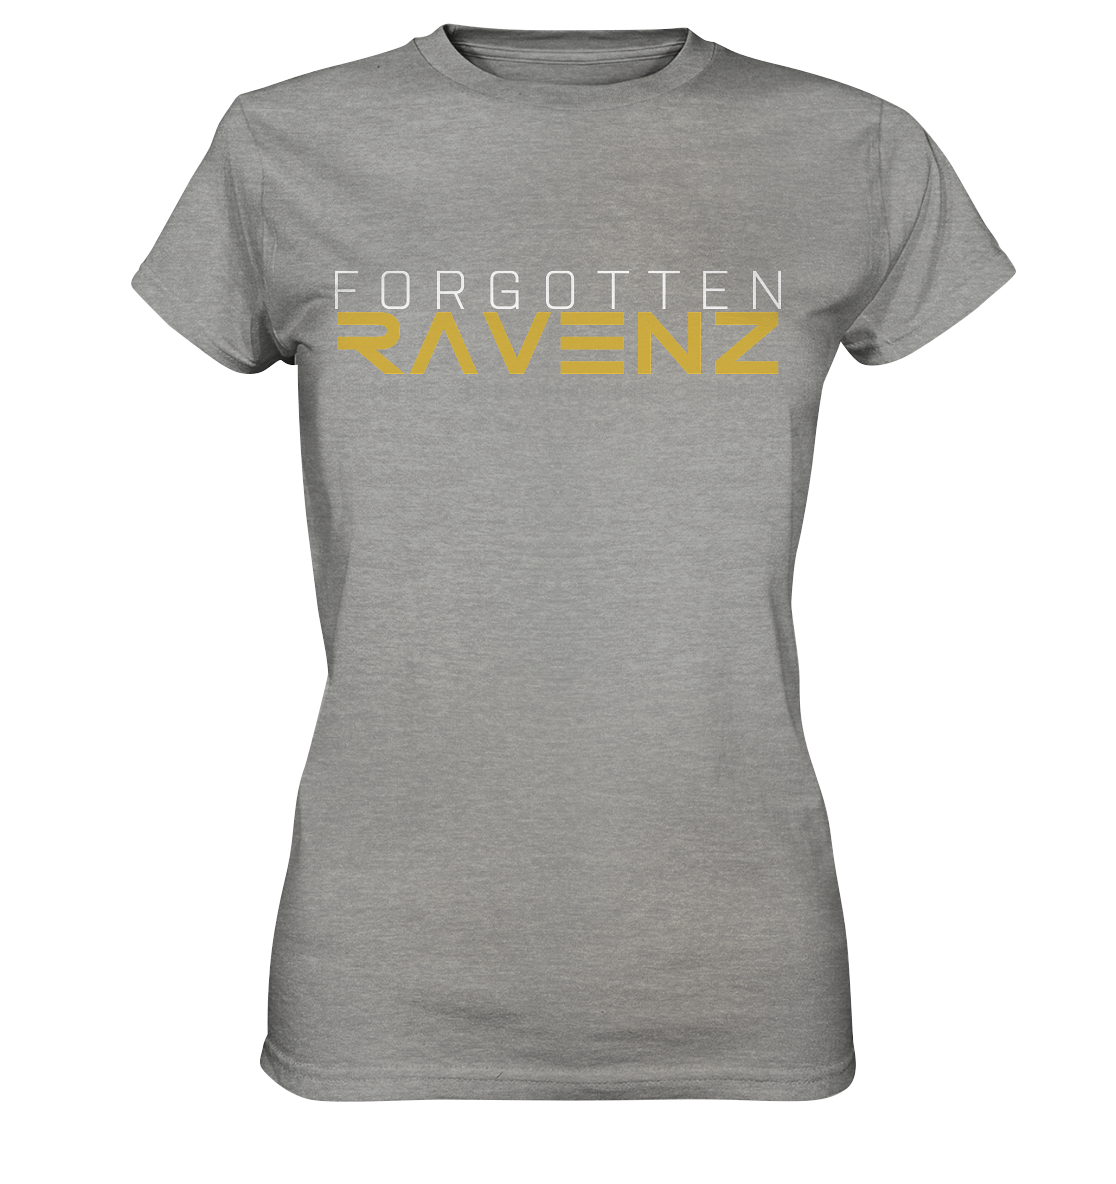 FORGOTTEN RAVENZ - Ladies Basic Shirt